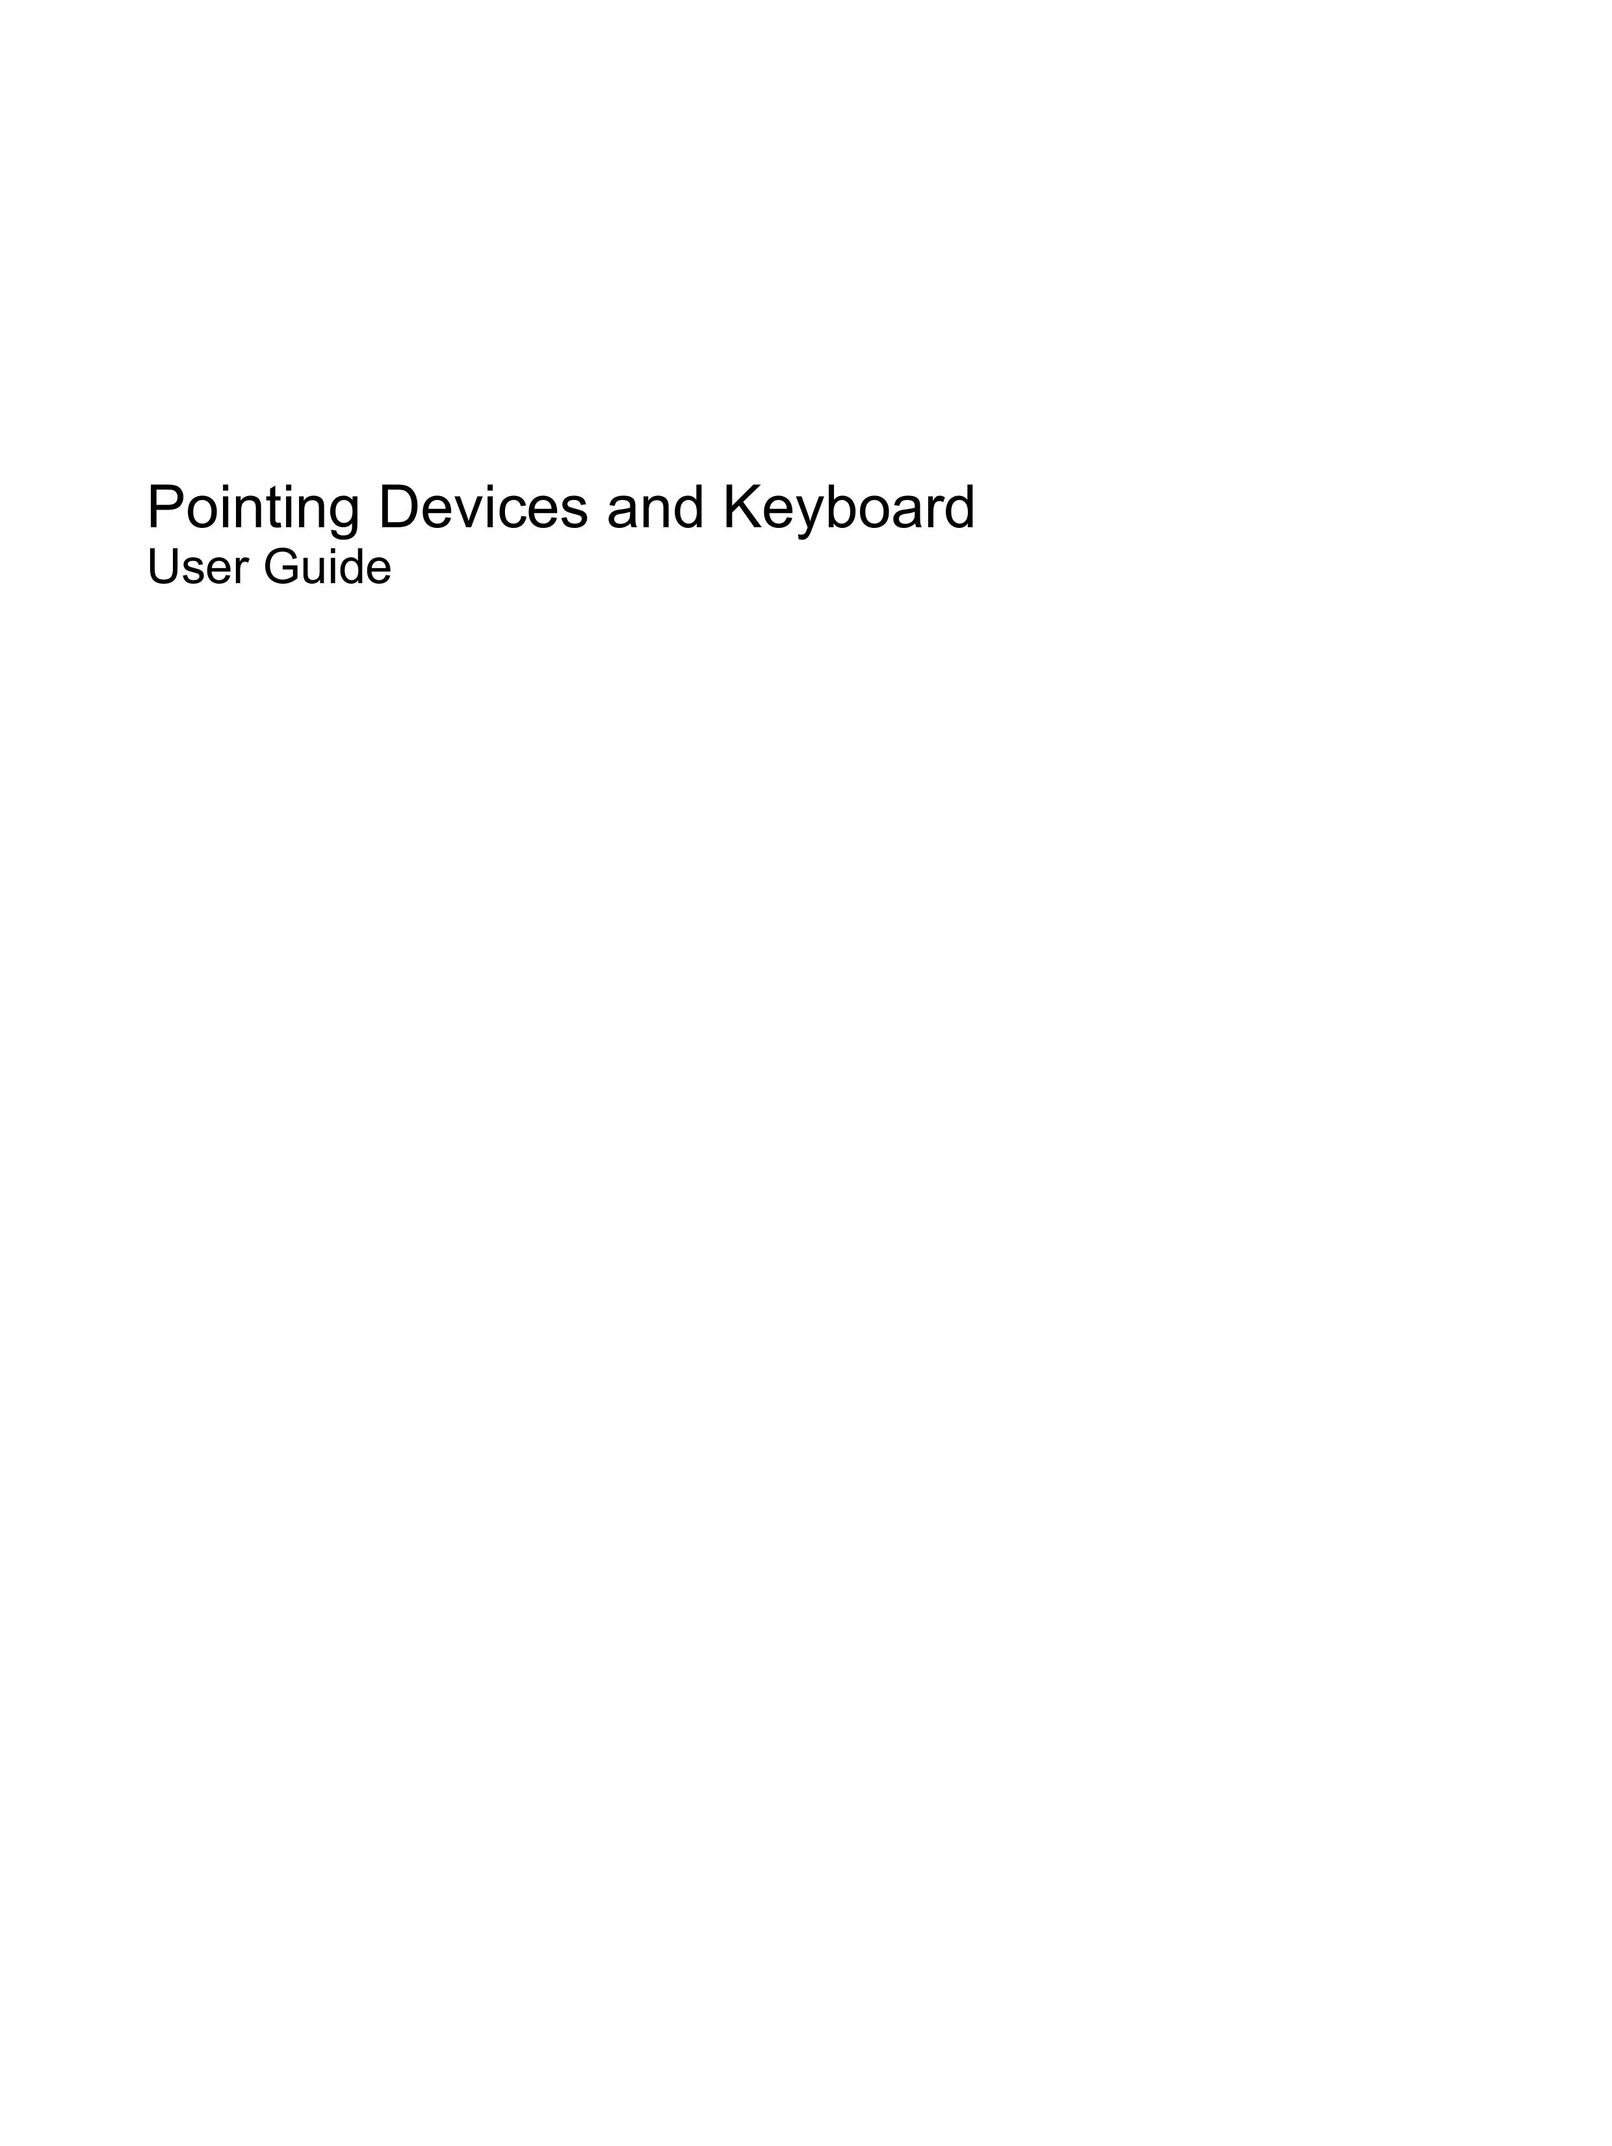 HP (Hewlett-Packard) 460105-001 Computer Keyboard User Manual